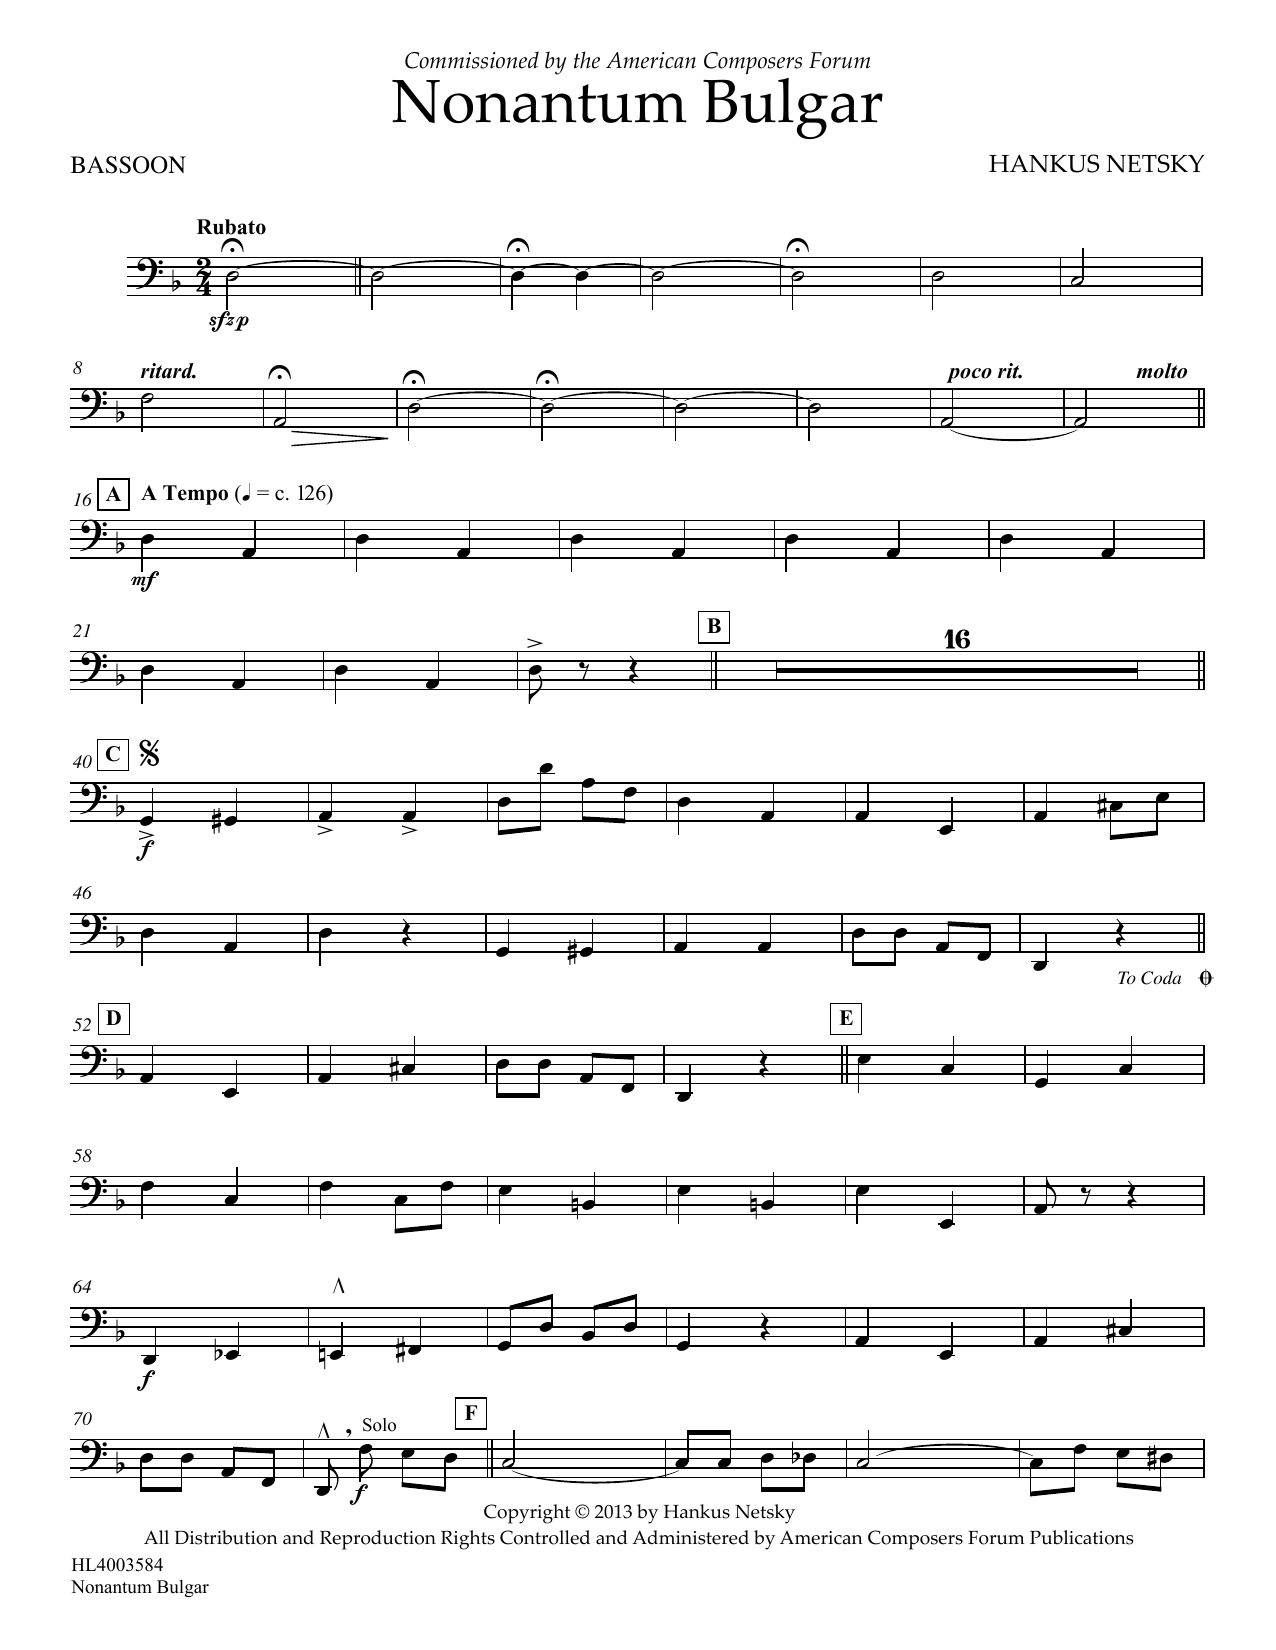 Download Hankus Netsky Nonantum Bulgar - Bassoon Sheet Music